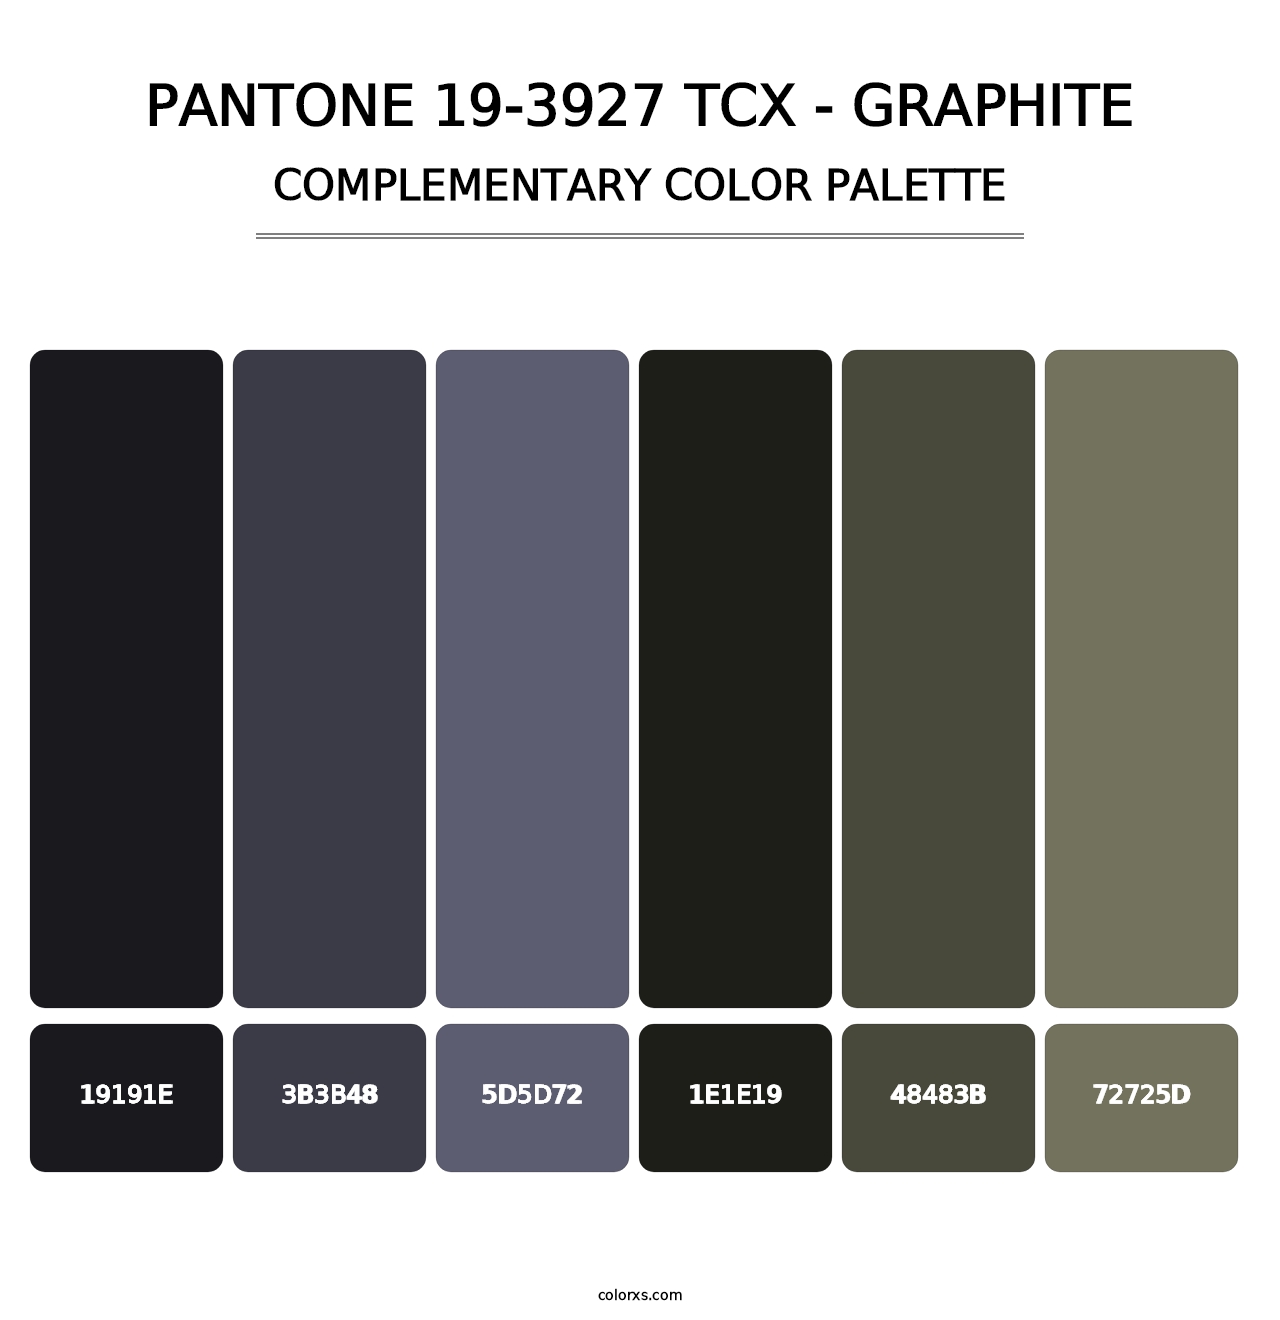 PANTONE 19-3927 TCX - Graphite - Complementary Color Palette